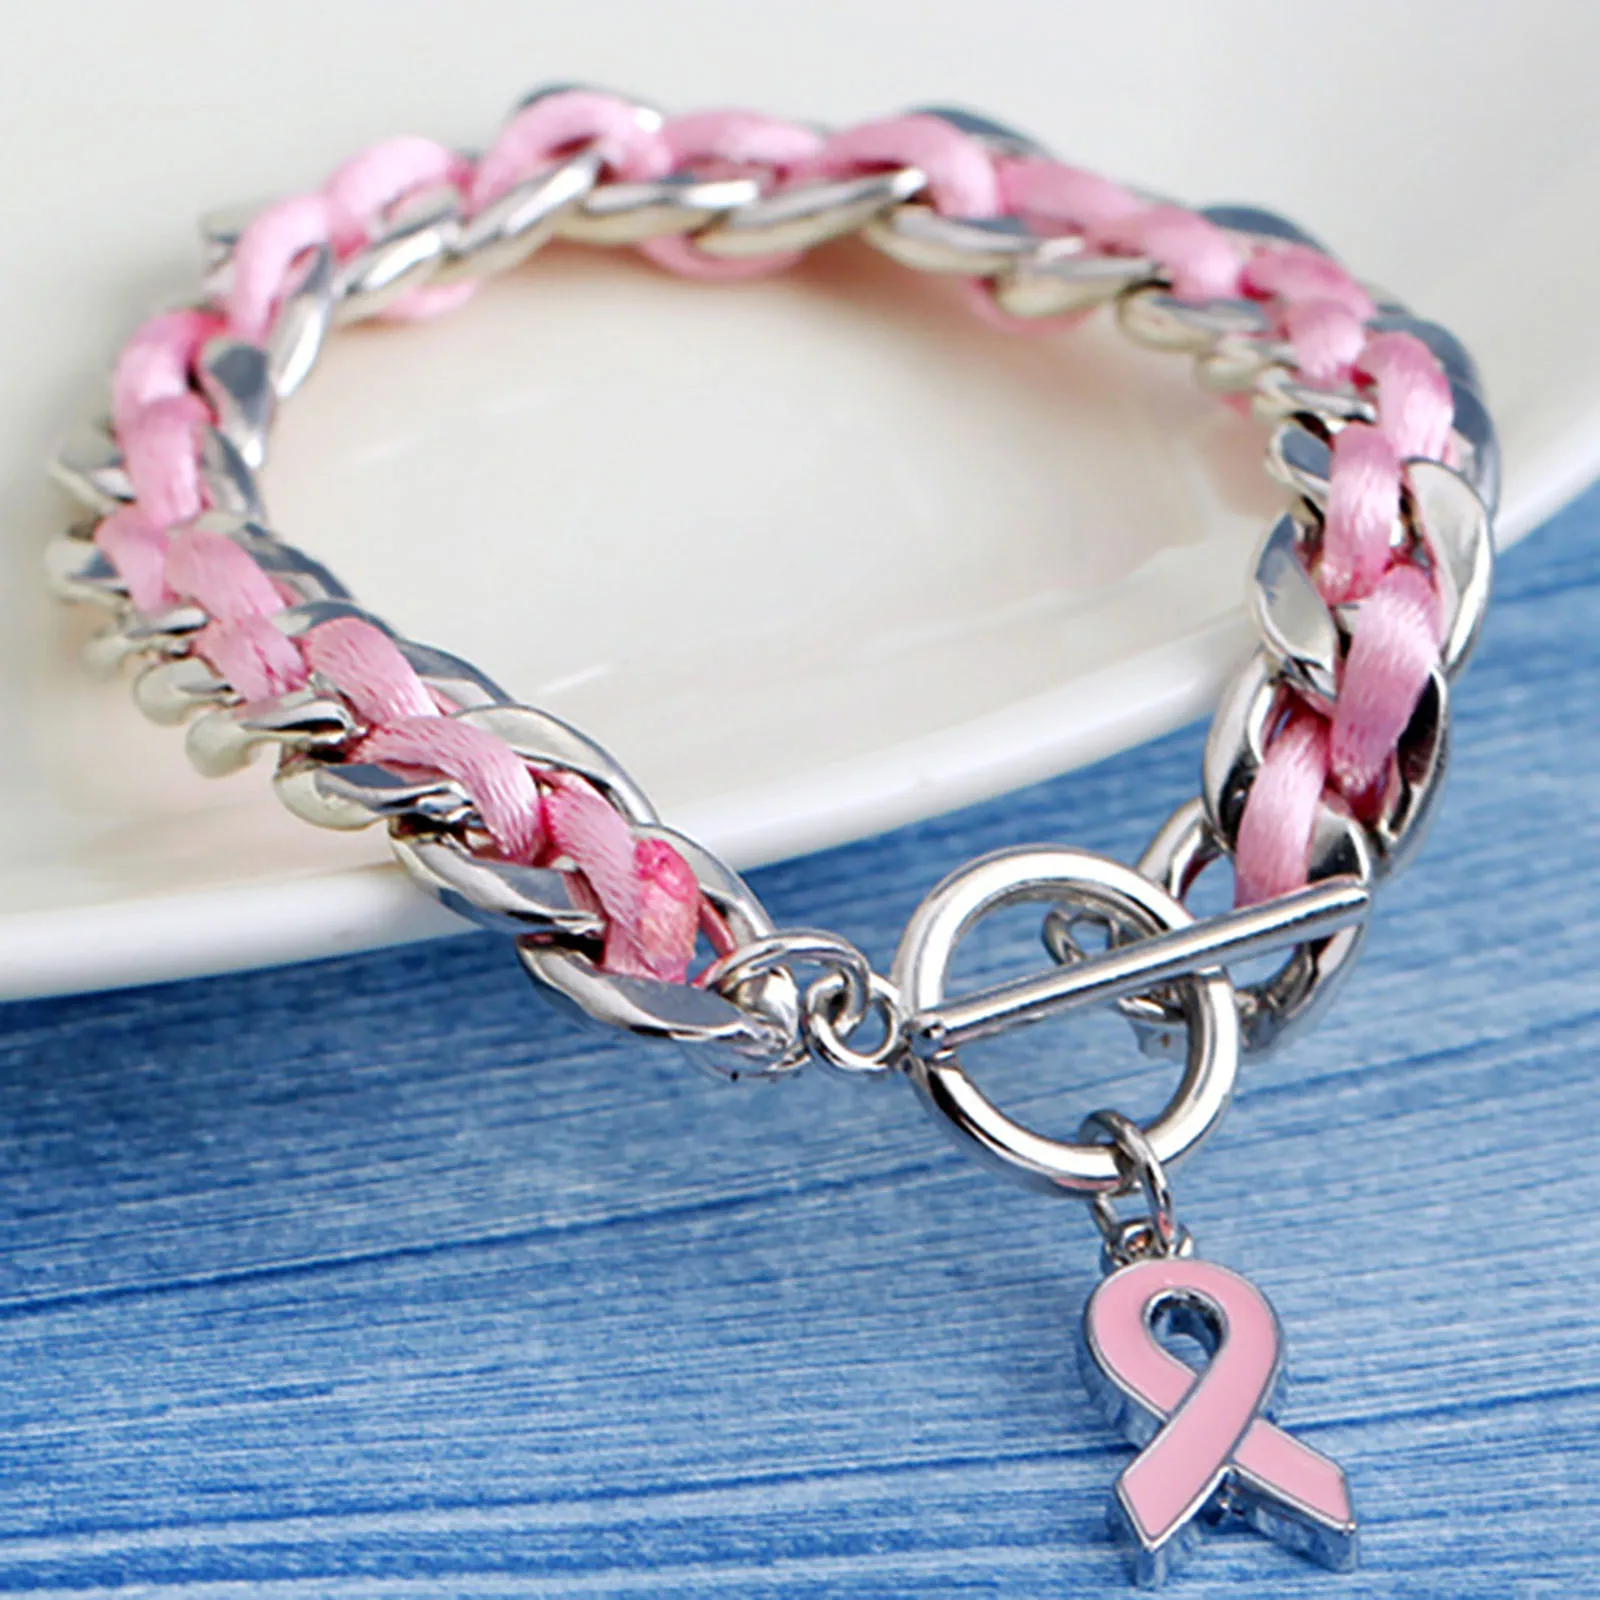 Breast Cancer Awareness Hope Bracelet For Women Pink Ribbon charm Braided Love Rope Wrap Bangle Fashion Bracelet Gift 2021